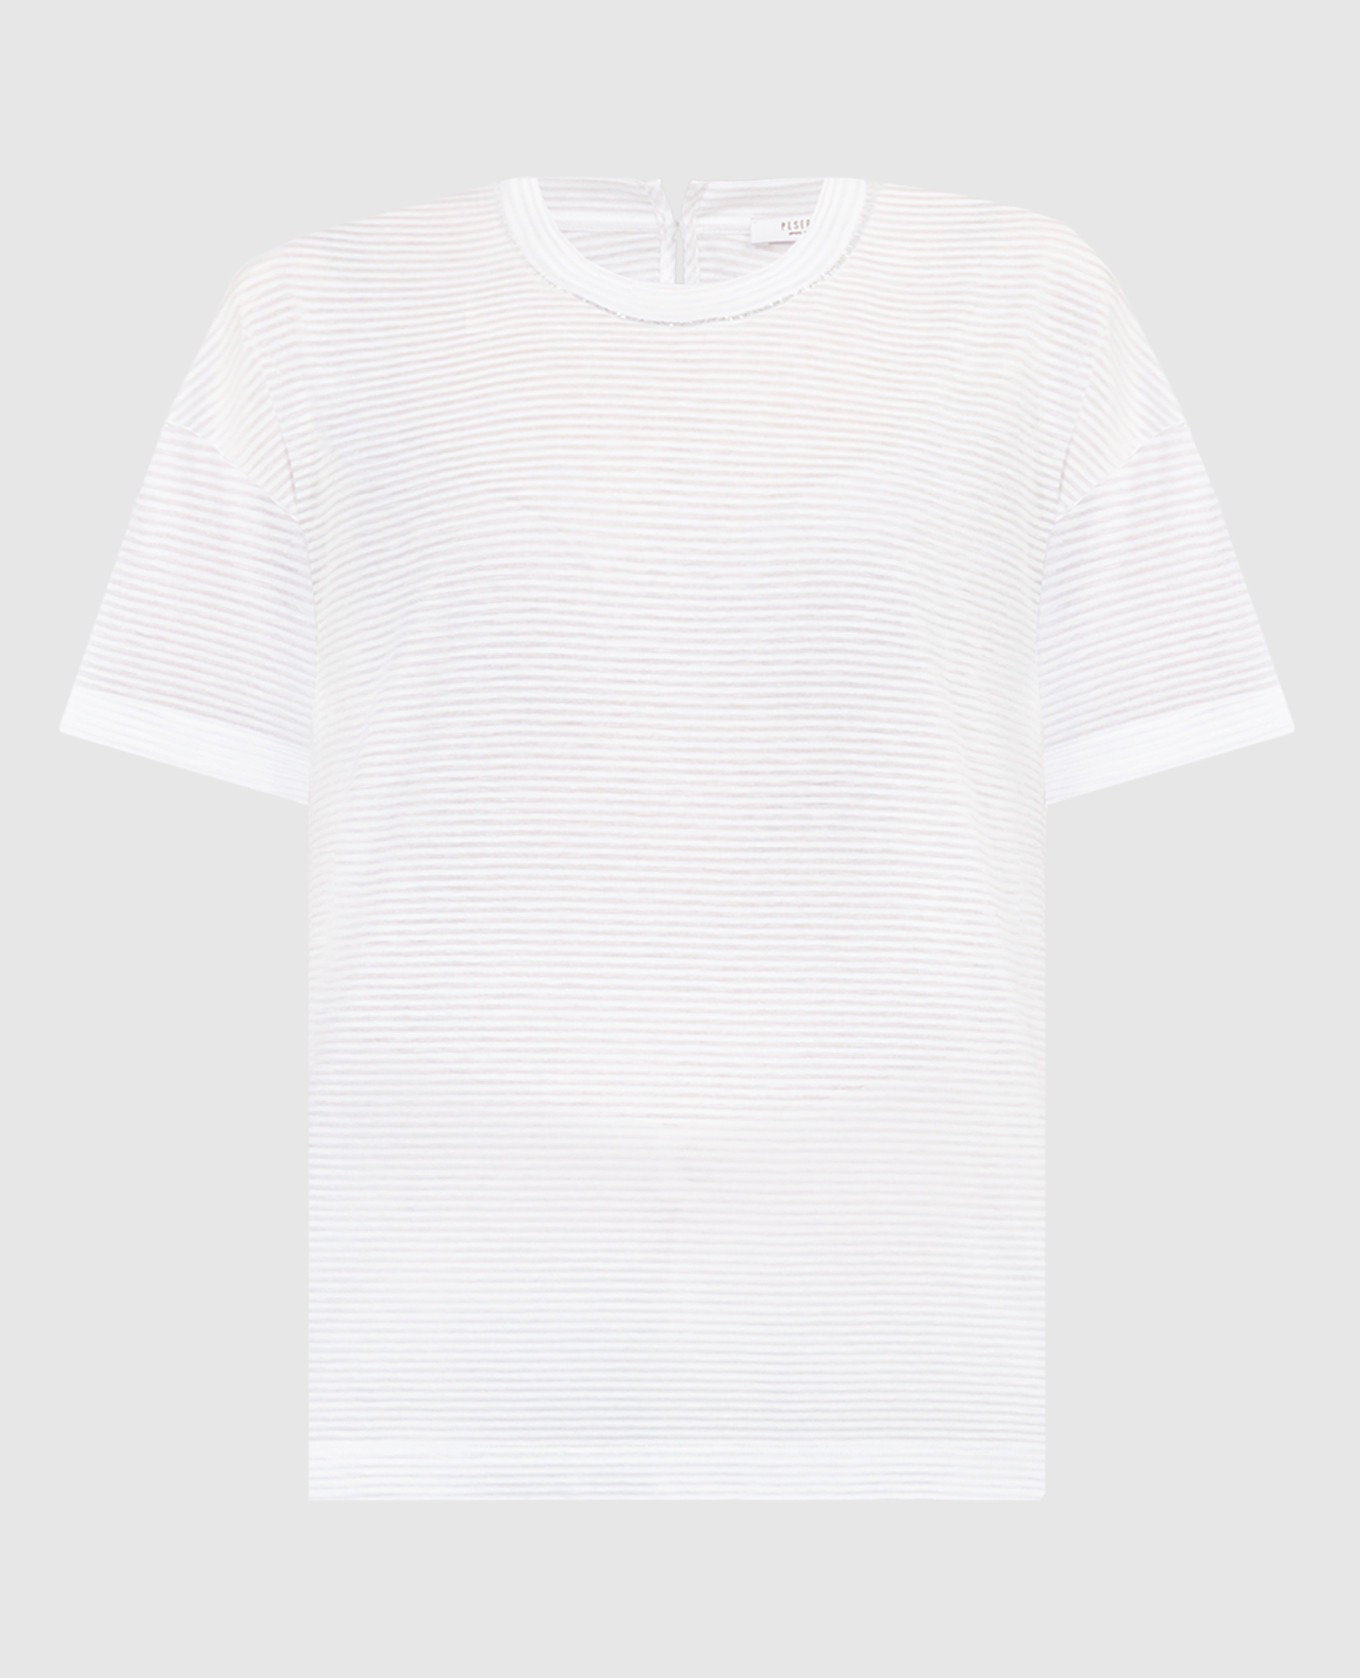 White striped t-shirt with monil chain